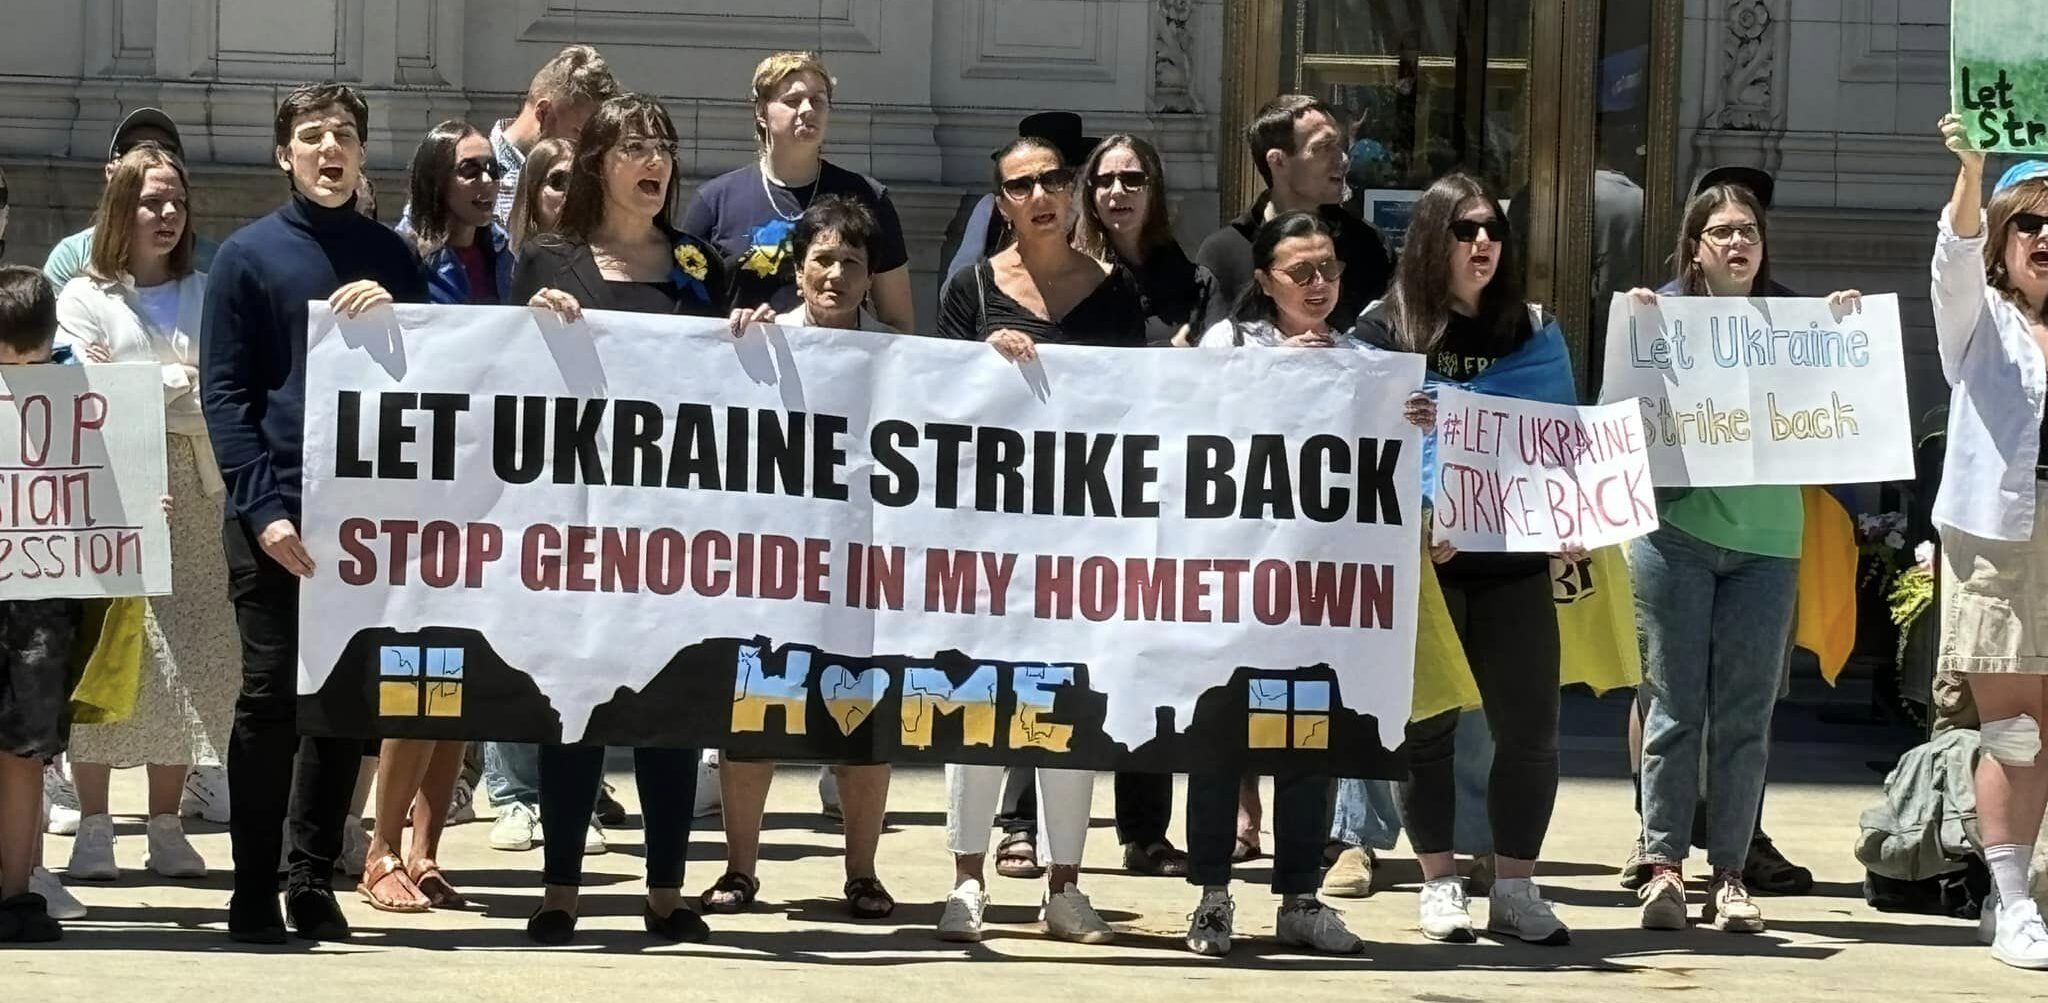 “Let Ukraine Strike Back”: Chicago’s Ukrainians protest